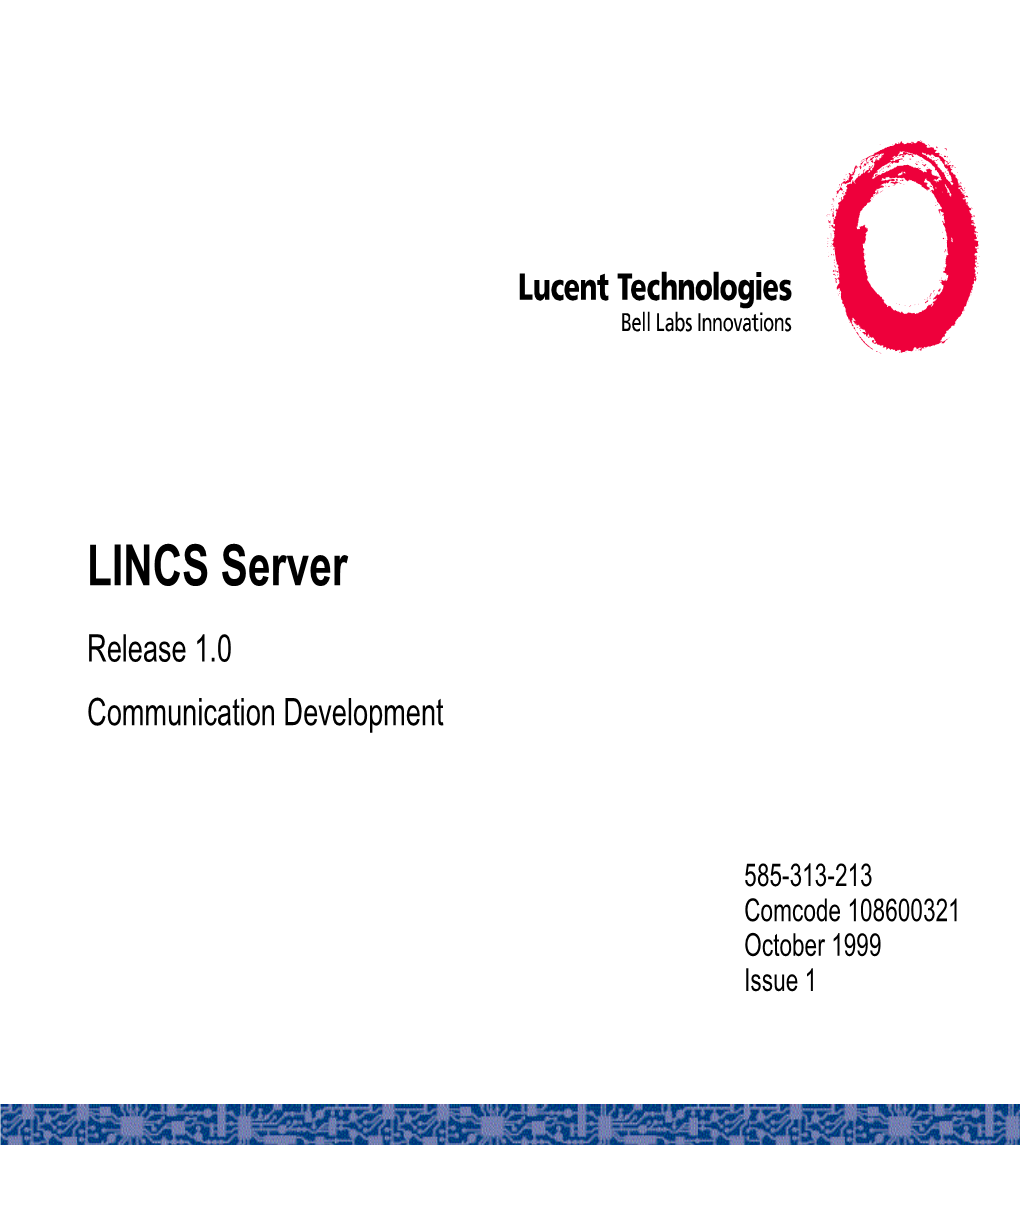 LINCS Server Release 1.0 Communication Development